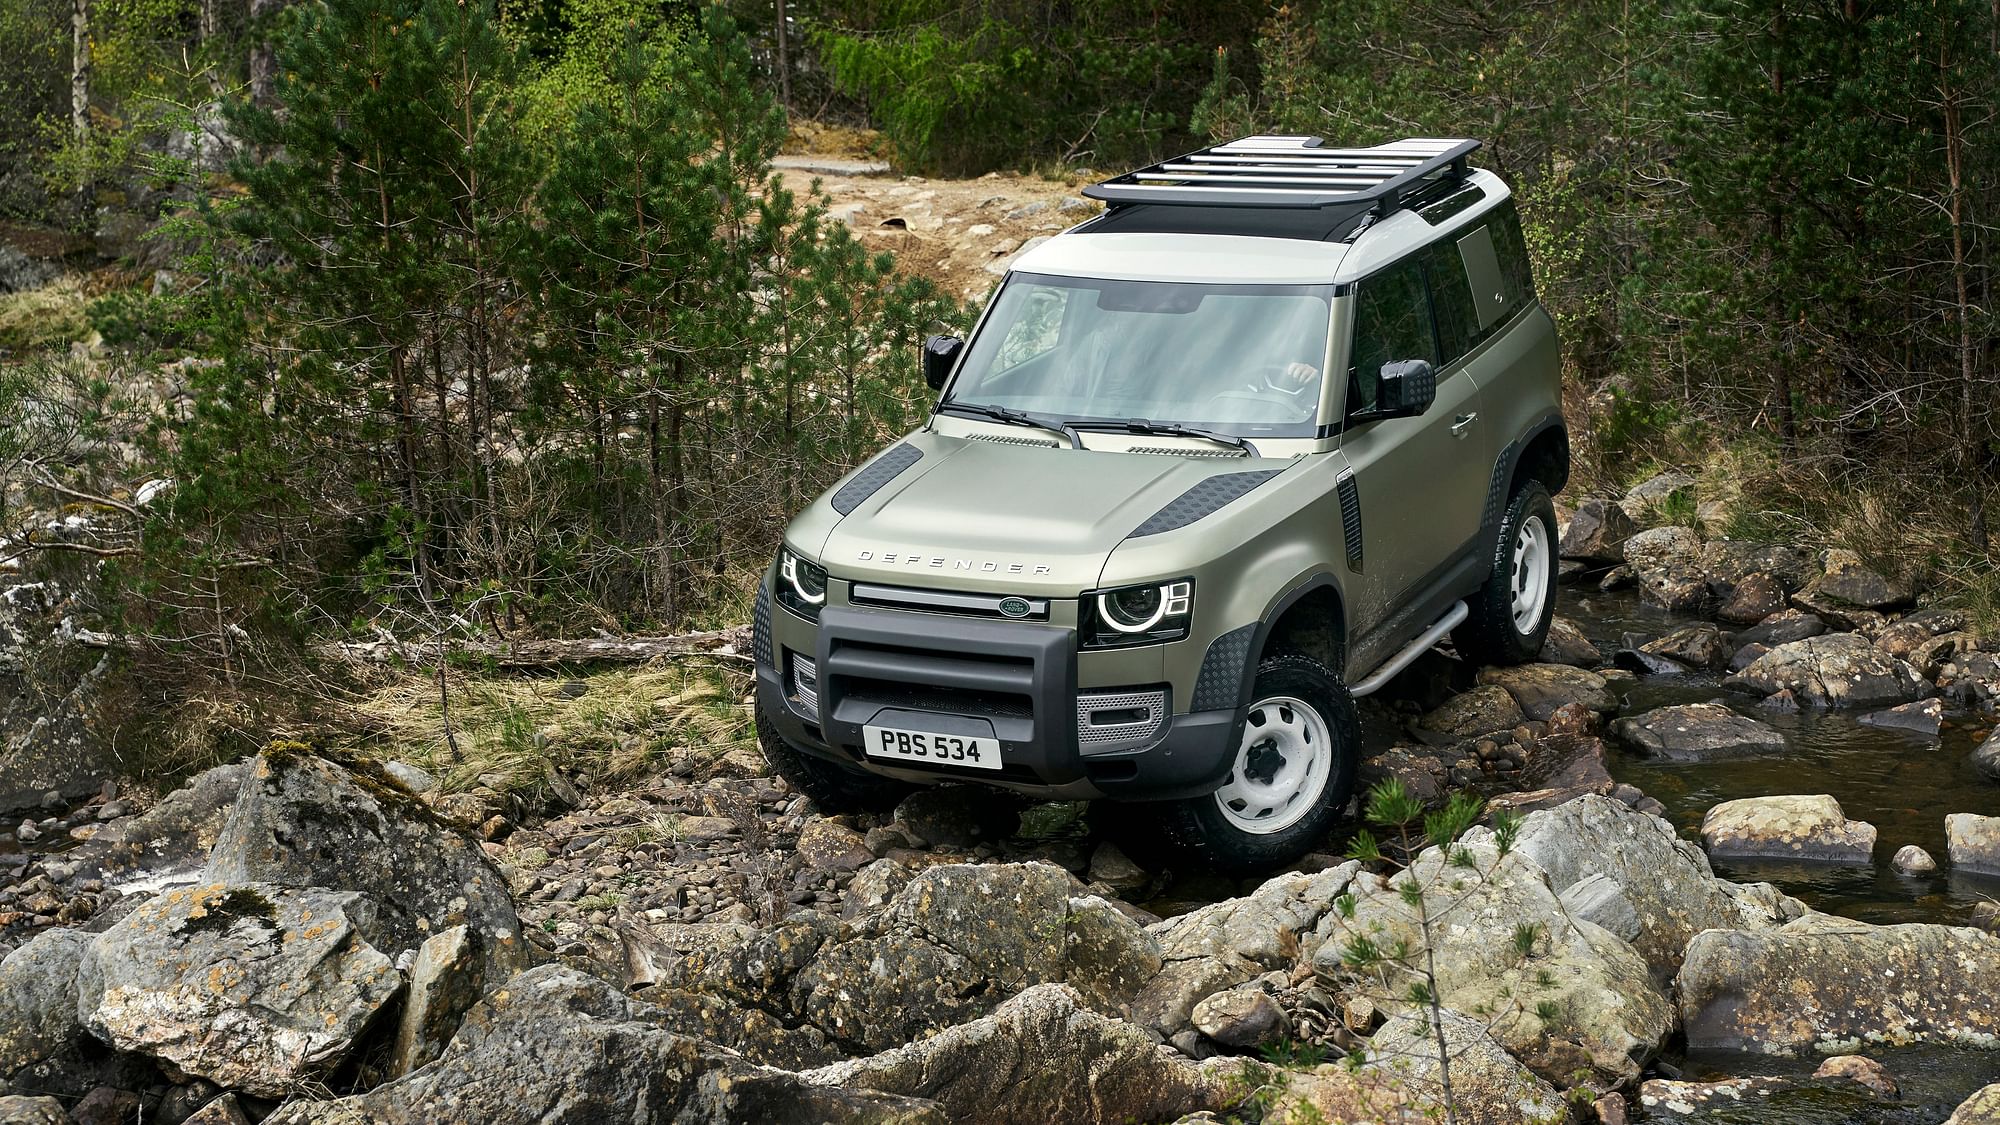 The Land Rover Defender will come in 3-door and 5-door forms.